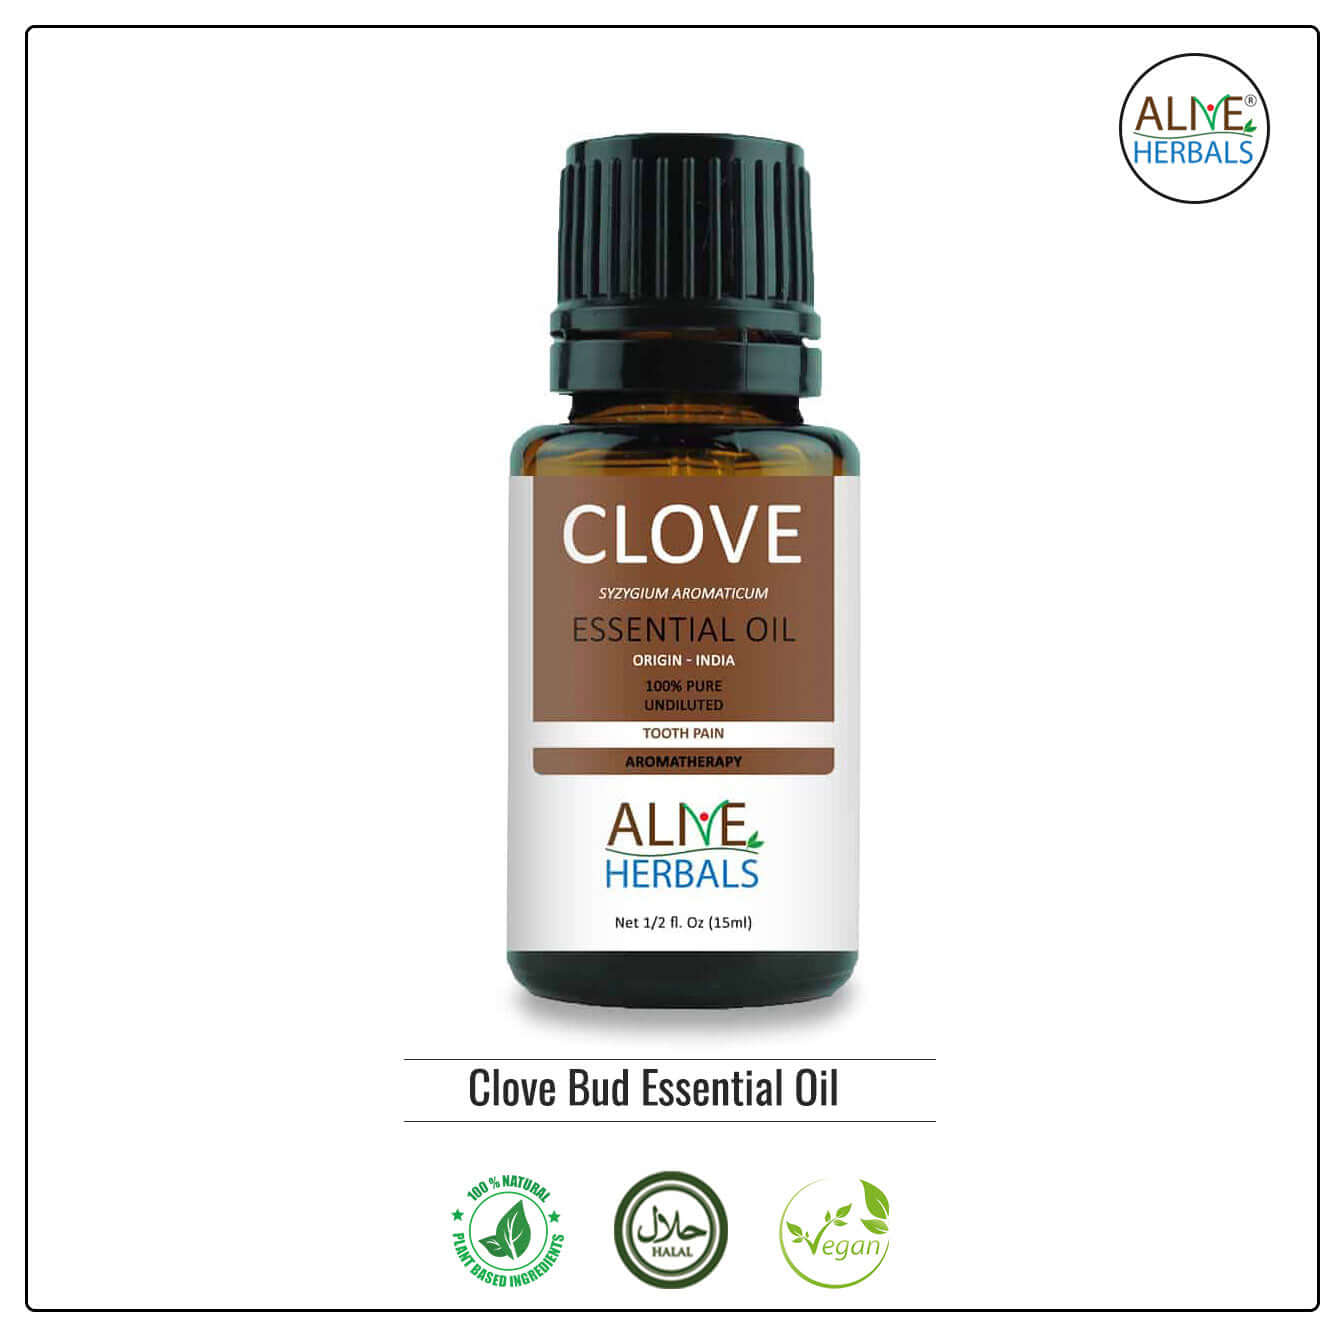 Clove Bud Essential Oil - Buy at Natural Food Store | Alive Herbals.